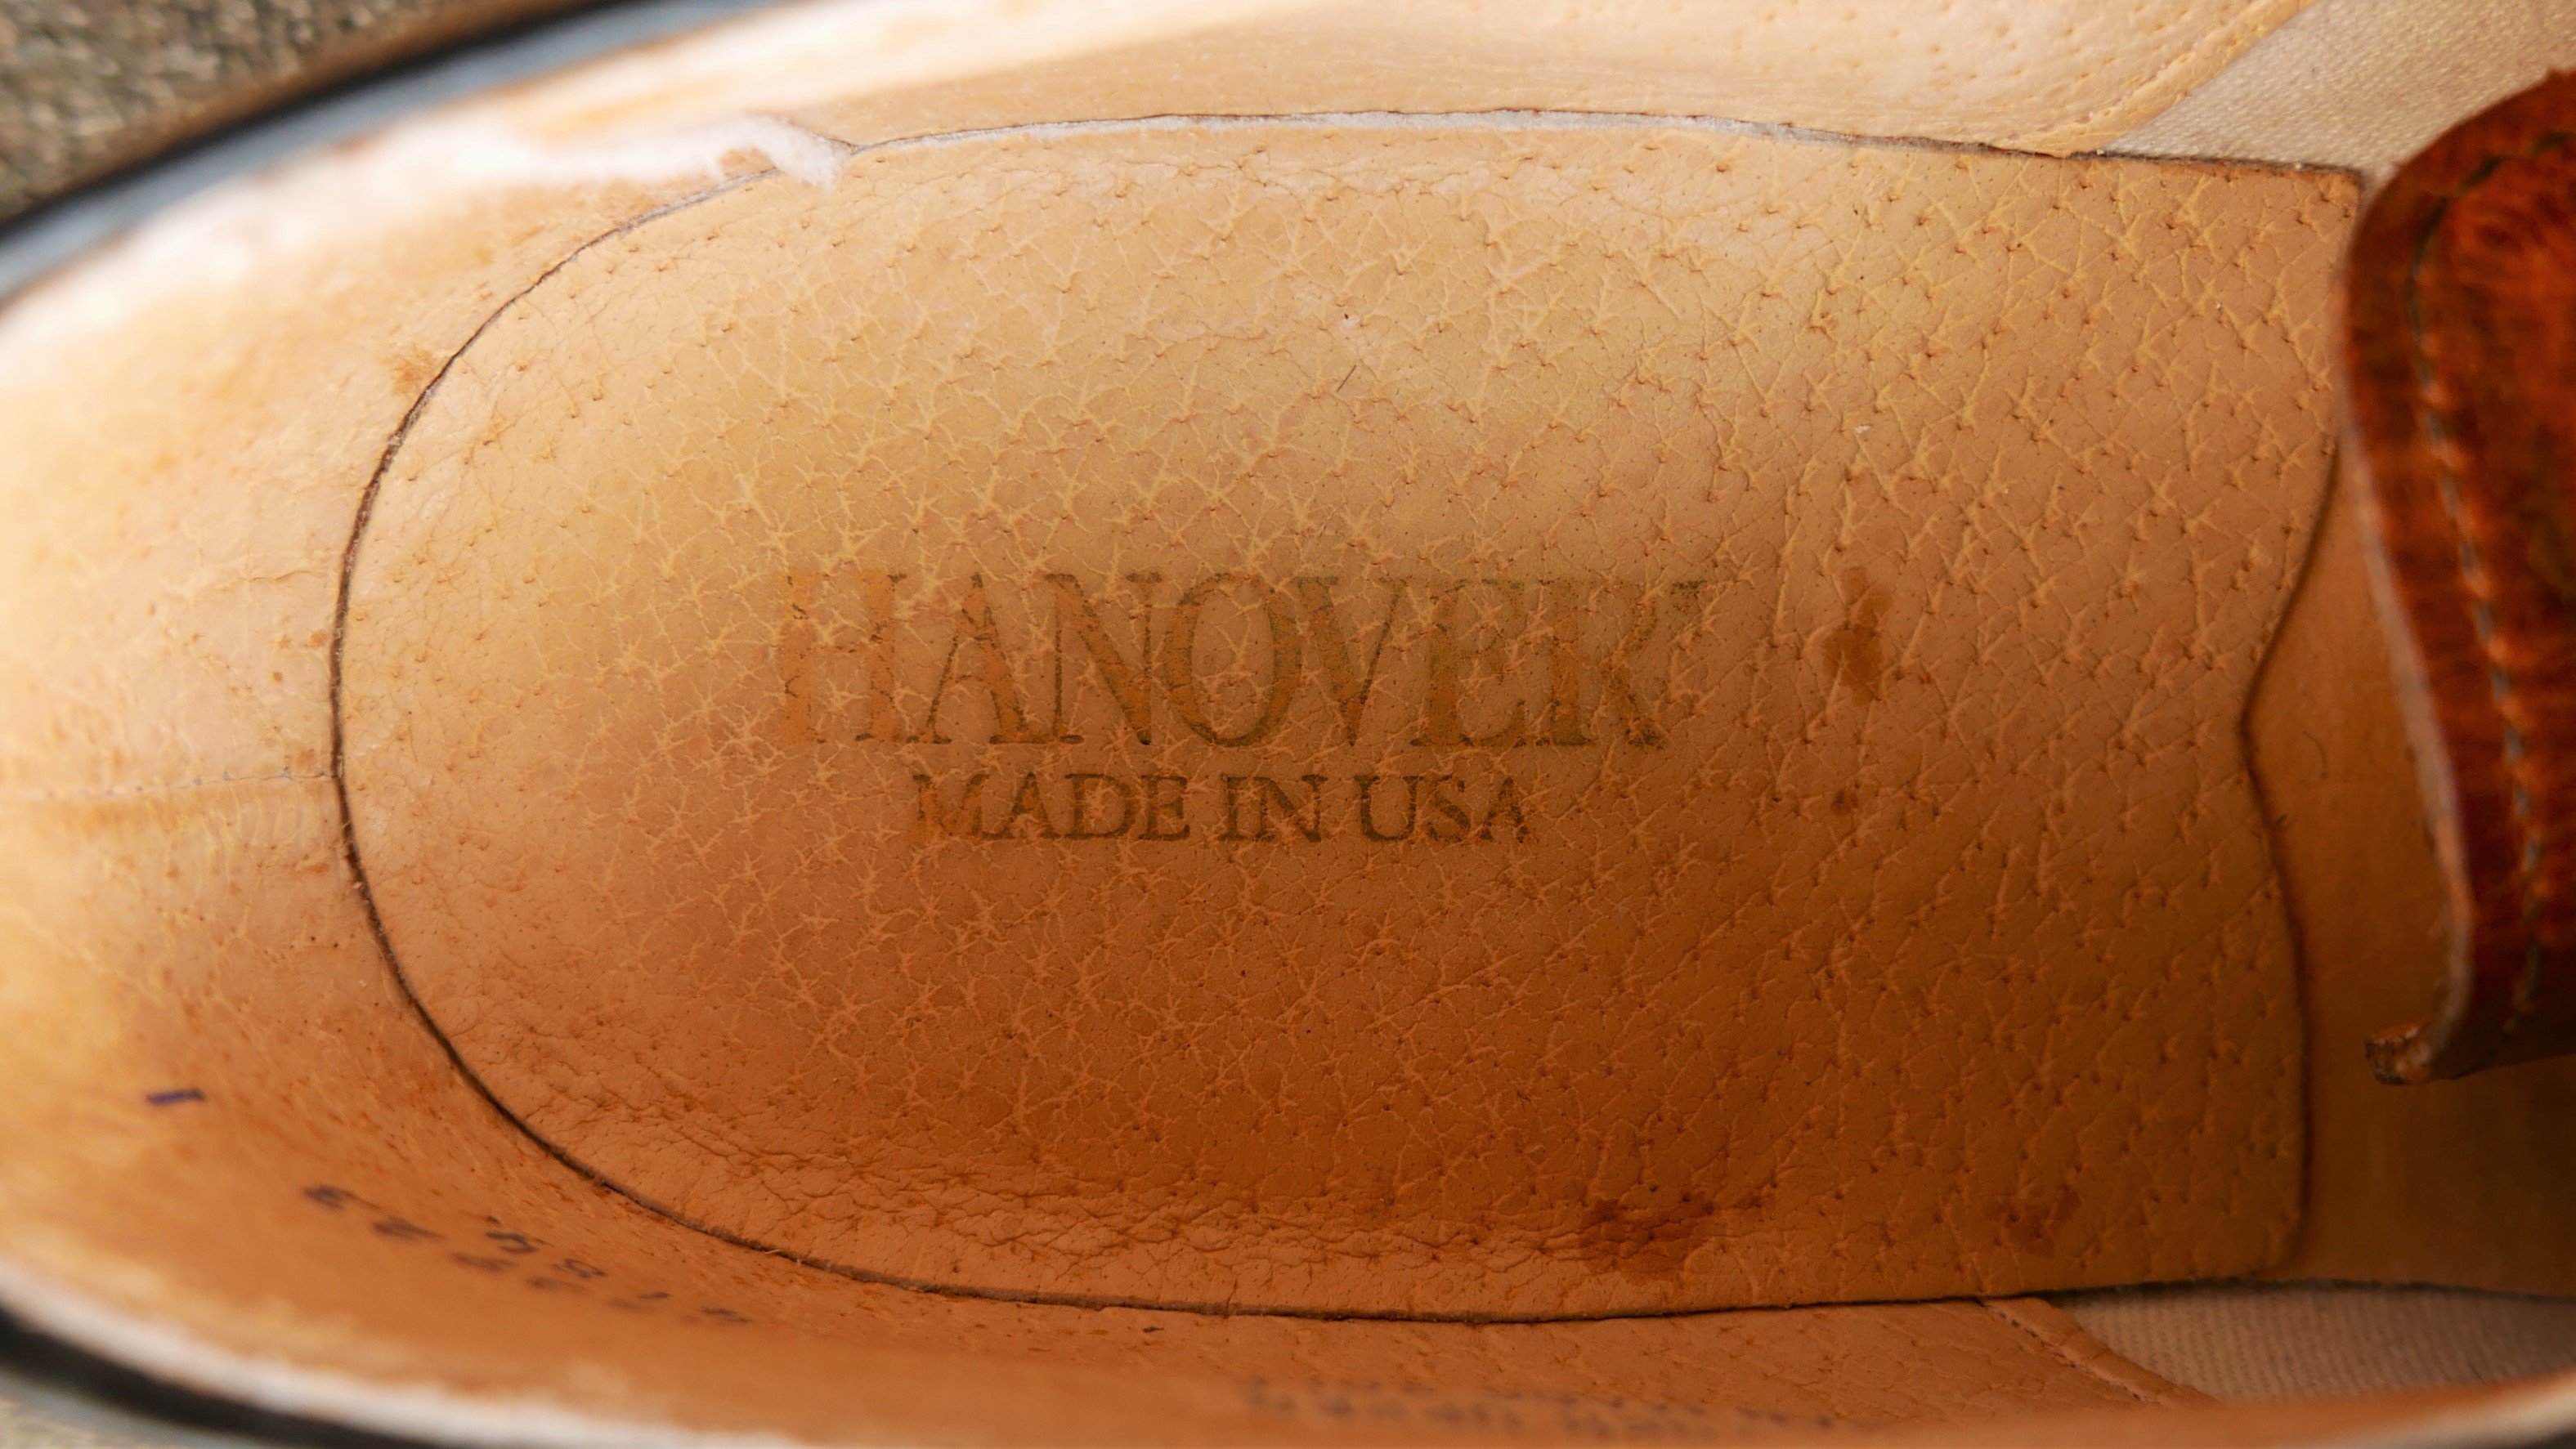 Hanover Made in USA